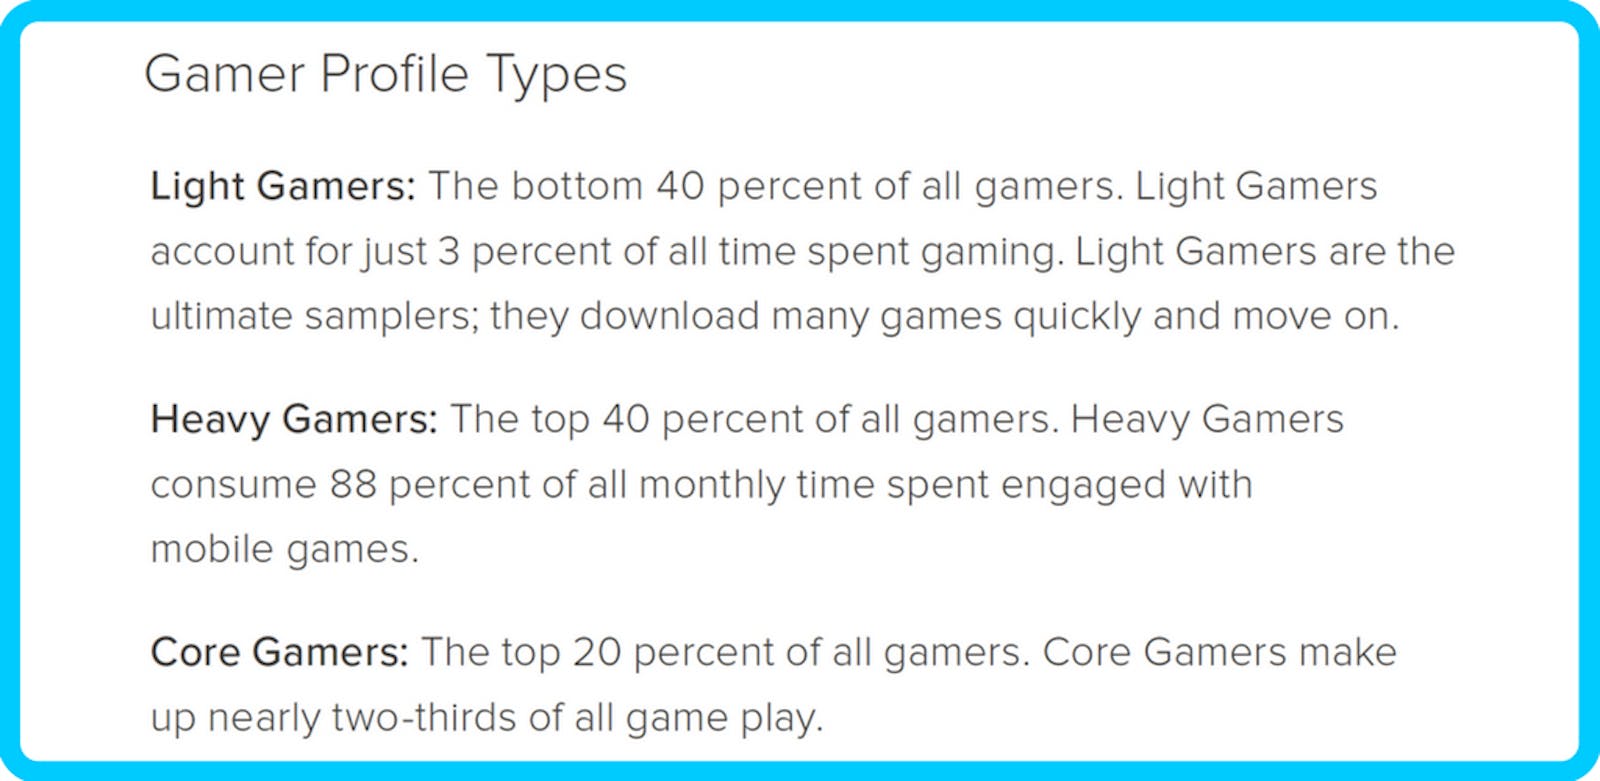 Mobile gamer profile types